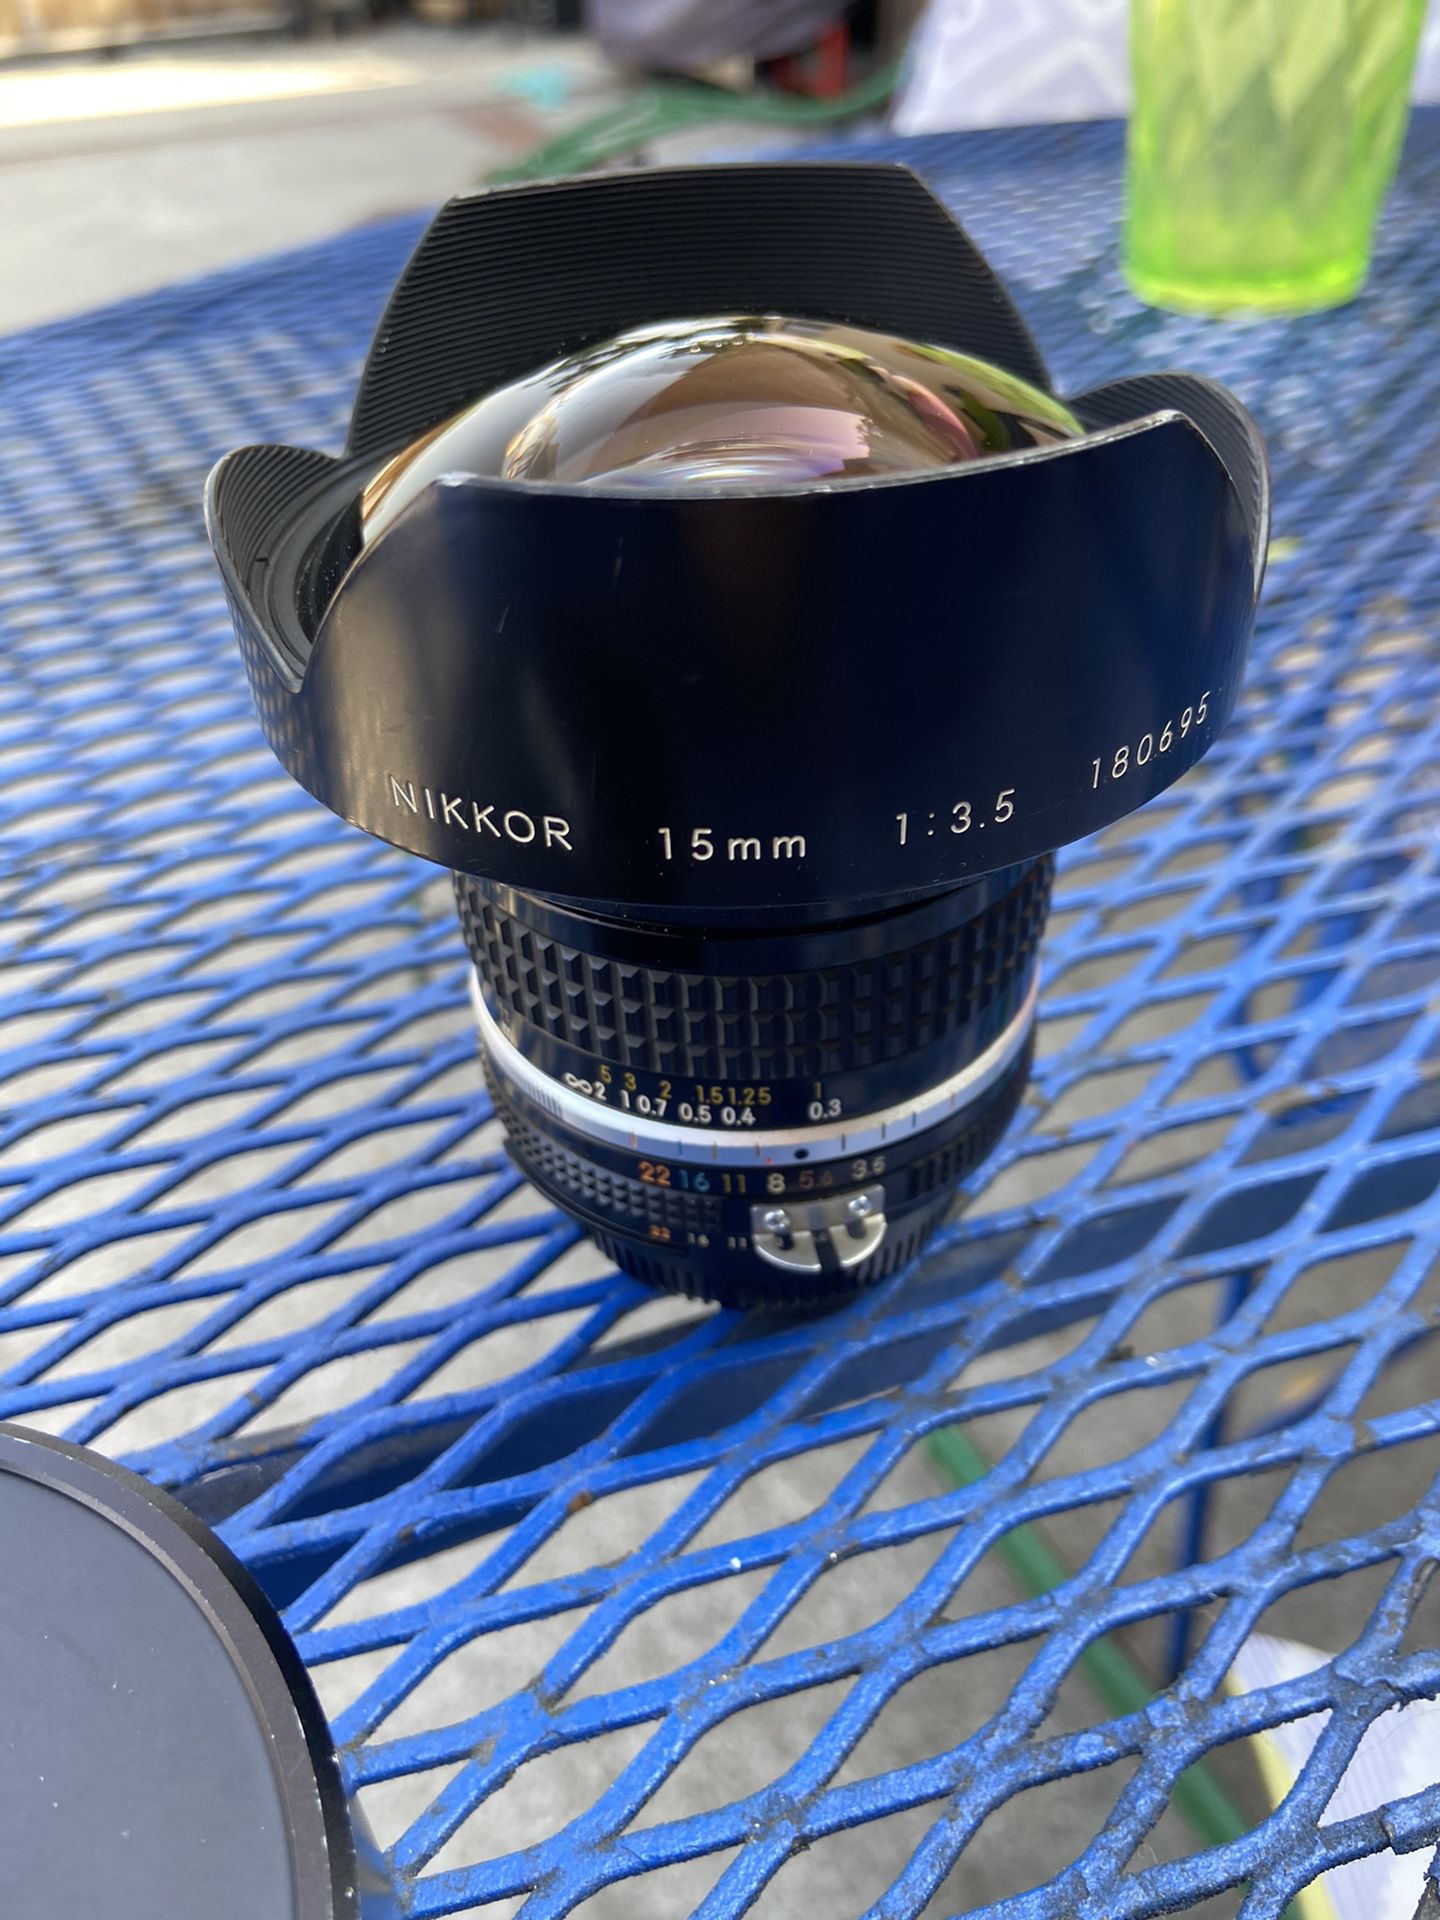 Nikon 15 F3.5 Fish Eye lens